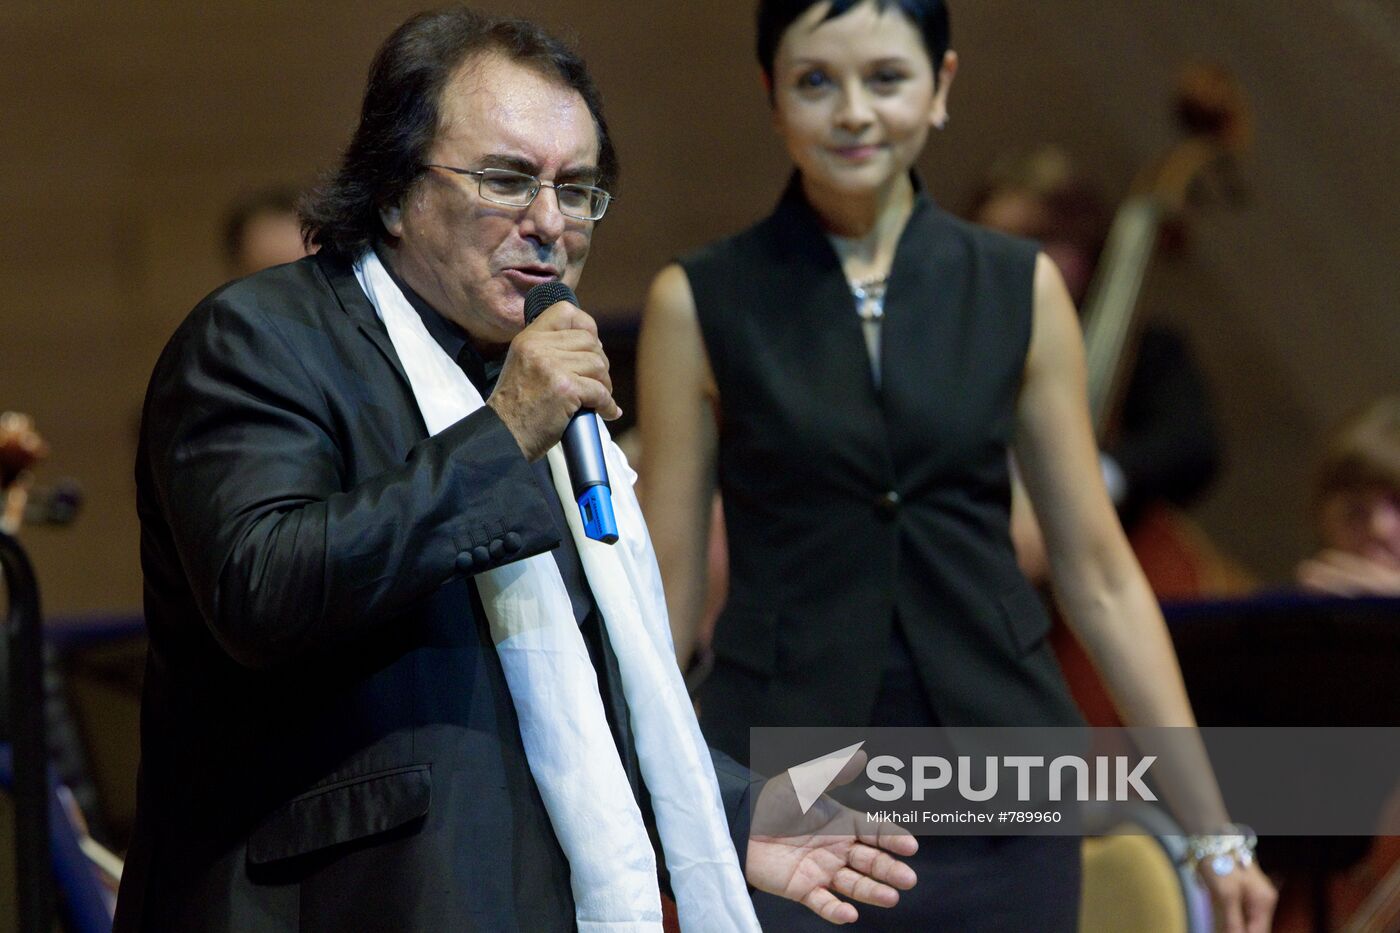 Italian singer Al Bano's concert in Moscow